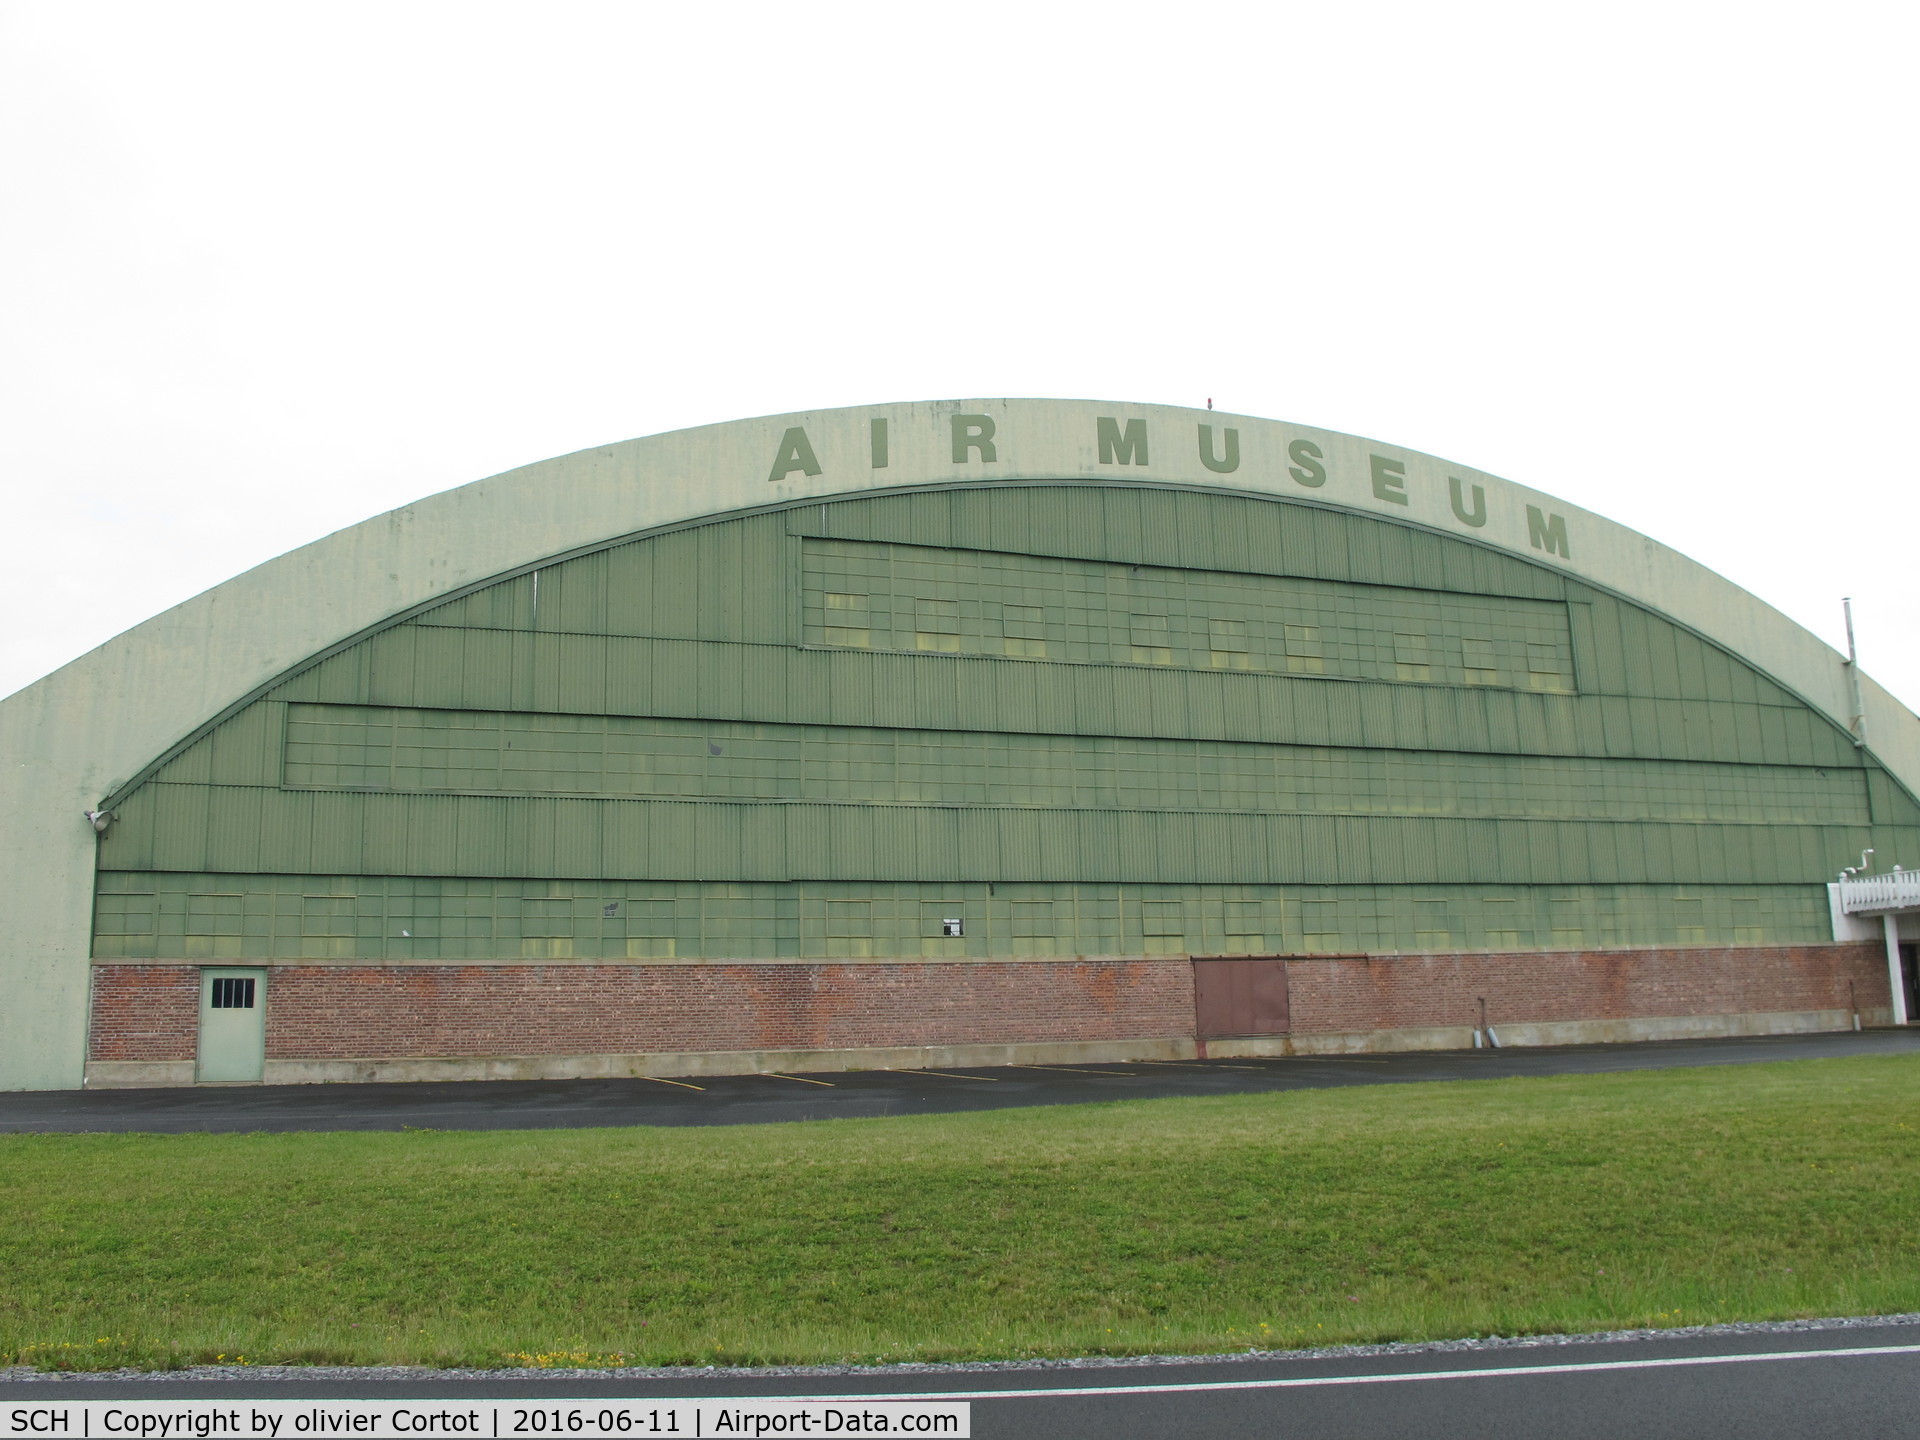 Schenectady County Airport (SCH) - The air museum hangar